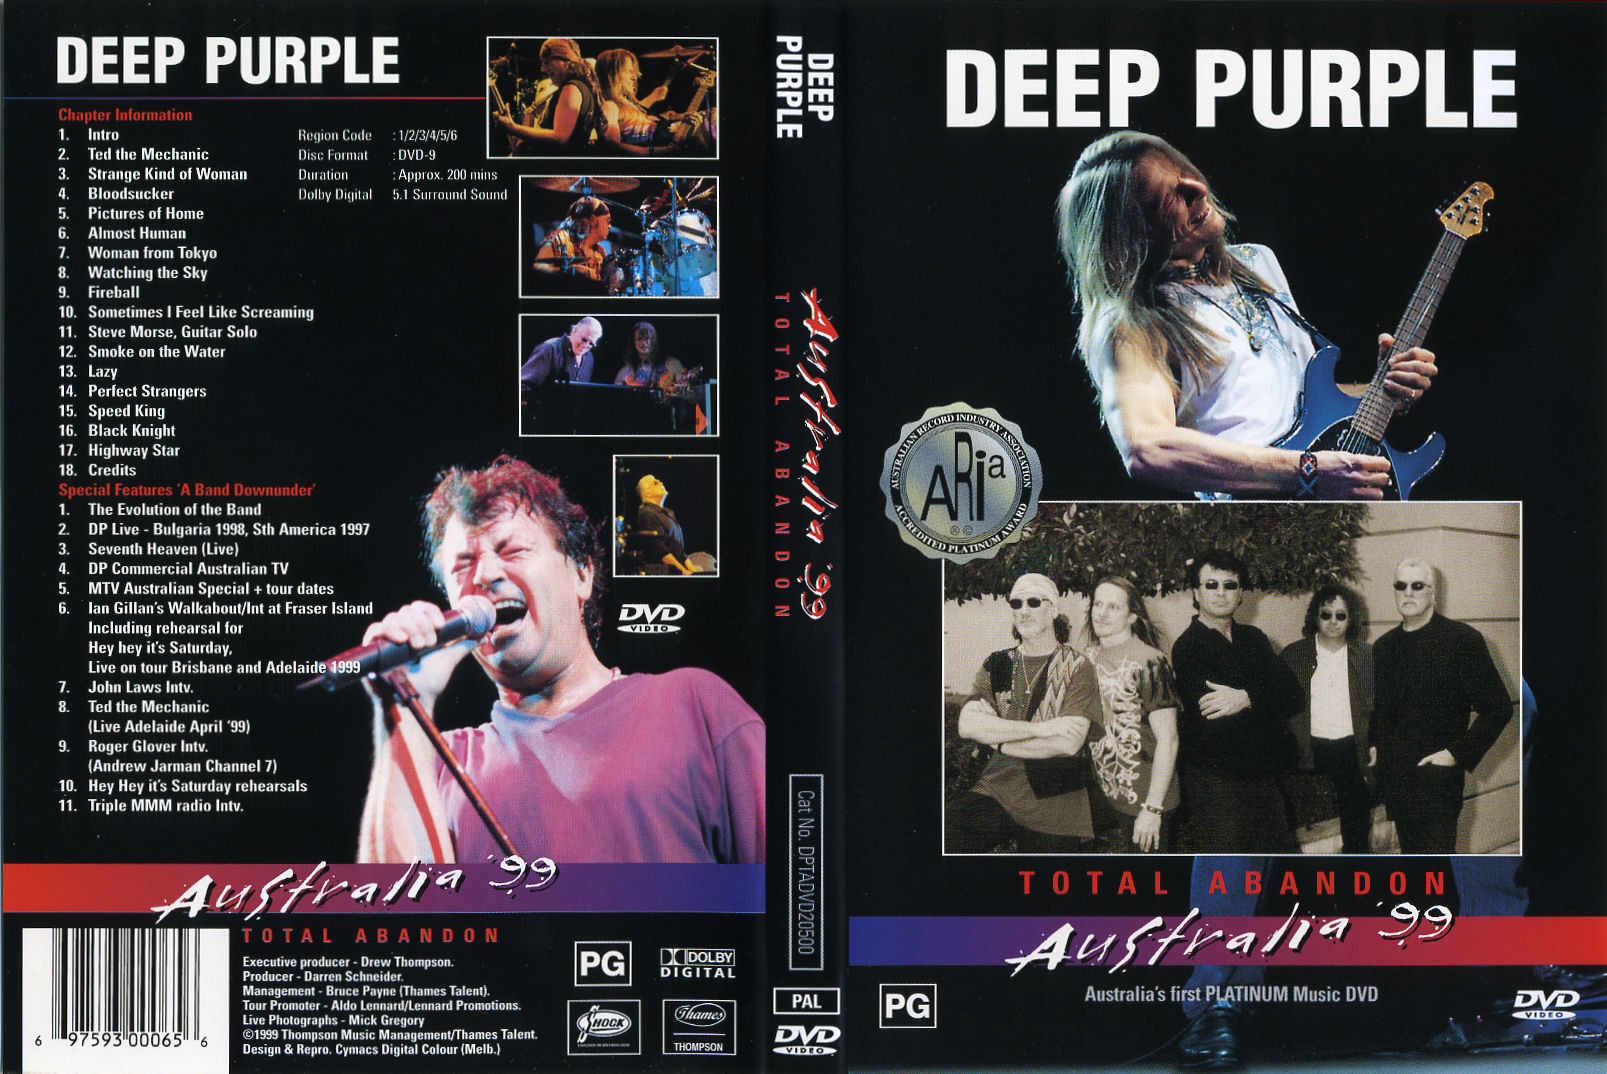 Jaquette DVD Deep Purple - Total Abandon Australia 99